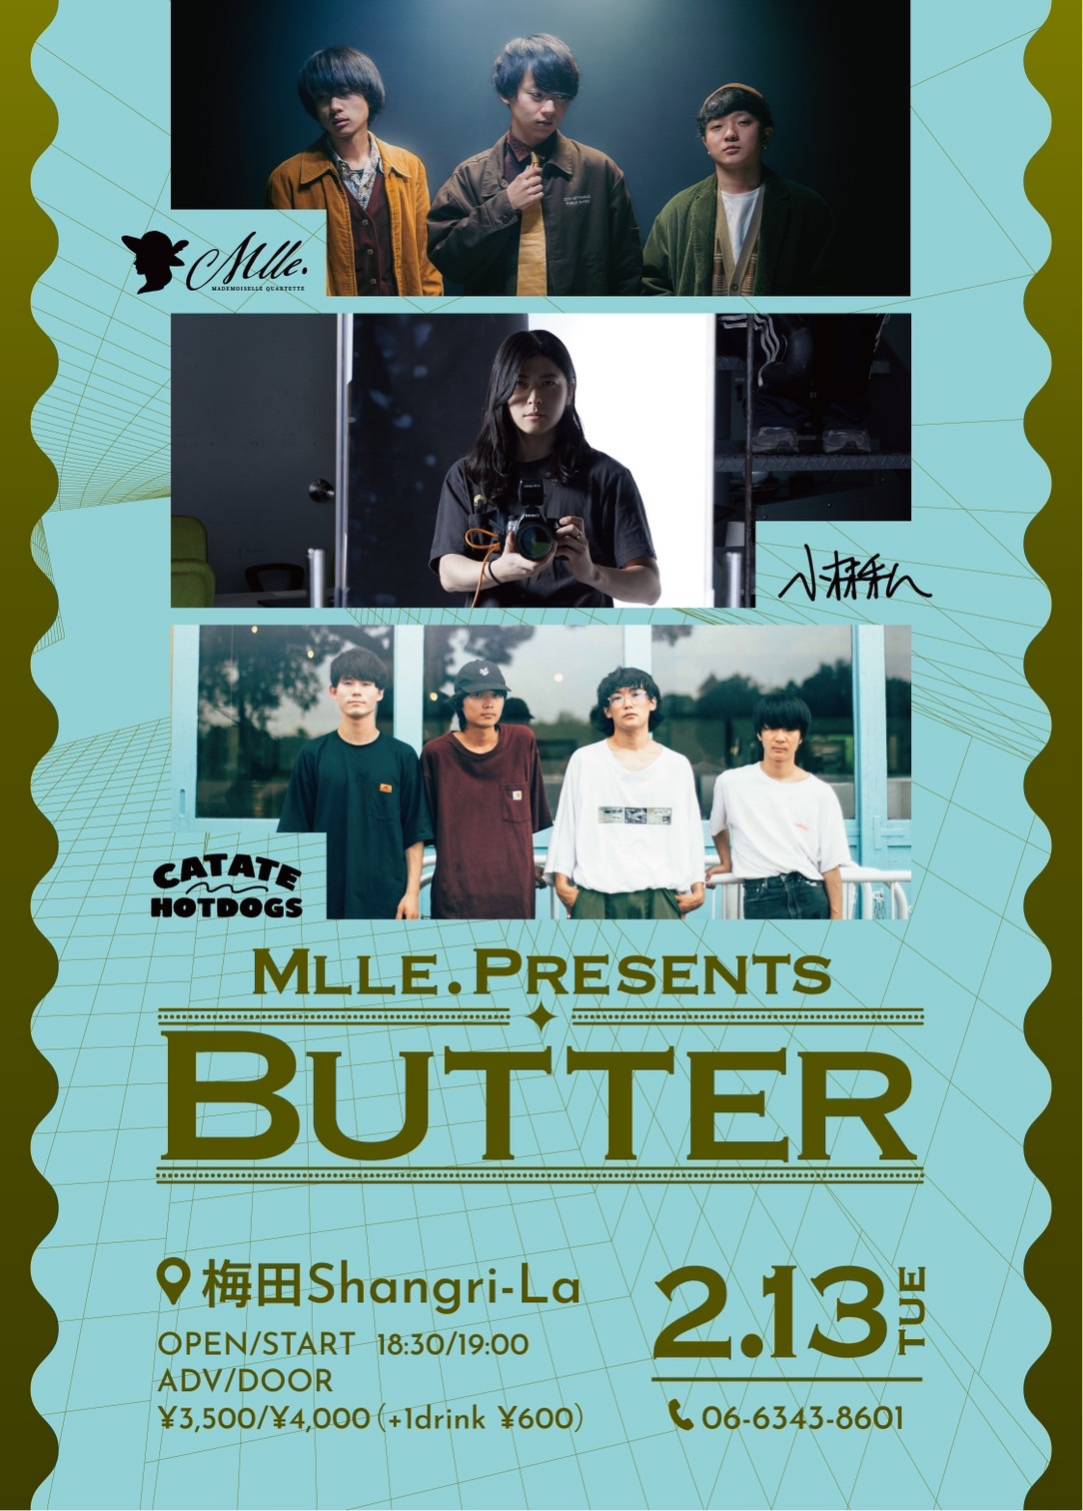 Mlle. Presents “Butter” 開催決定&情報解禁